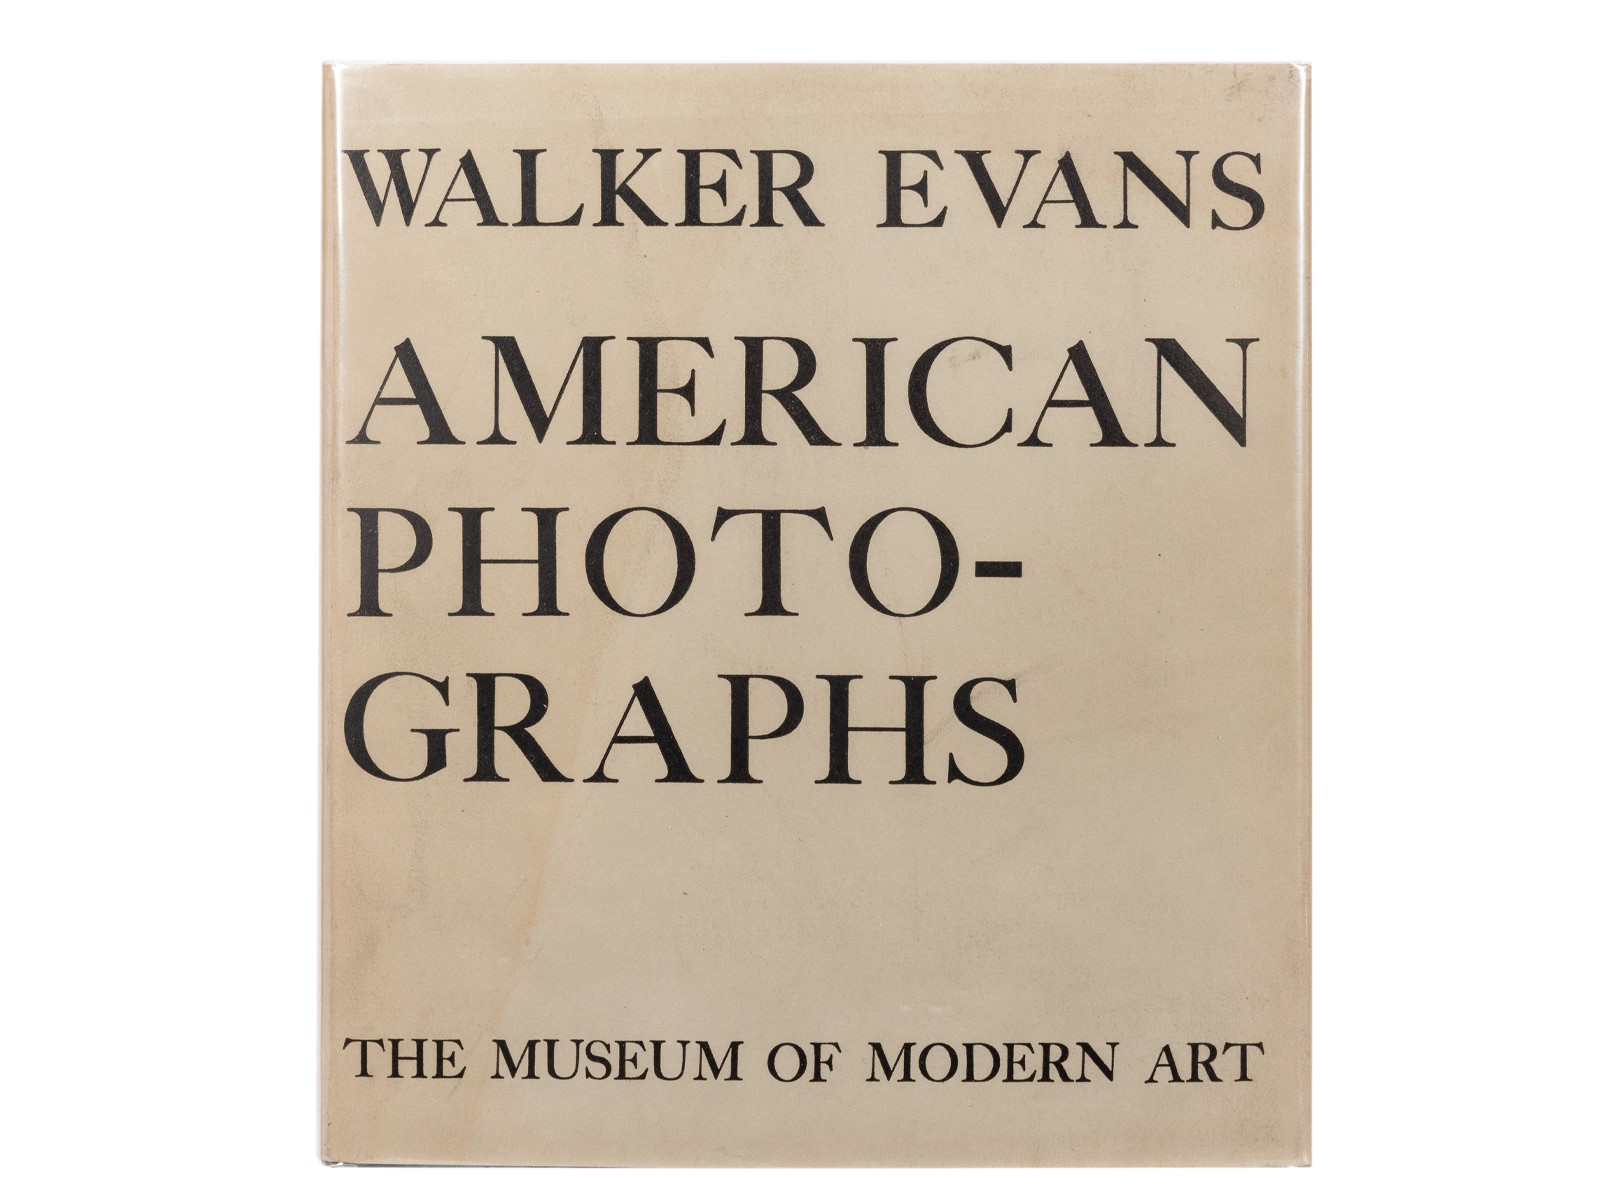 Walker Evans's American Photographs